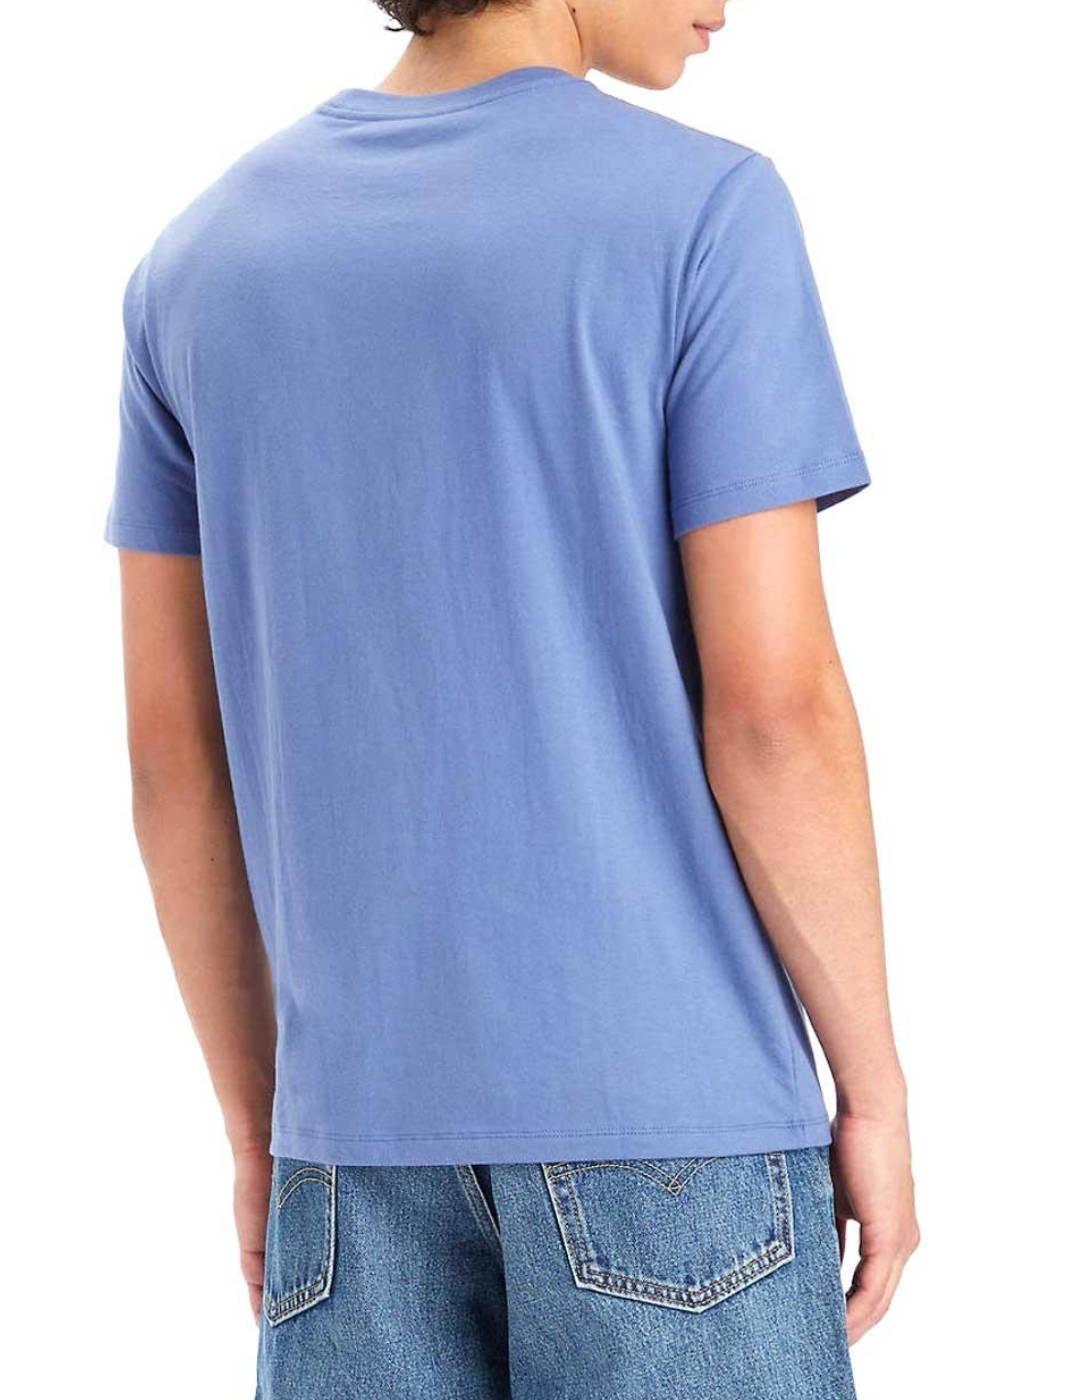 Camiseta Levi`s Classic azul manga corta para hombre